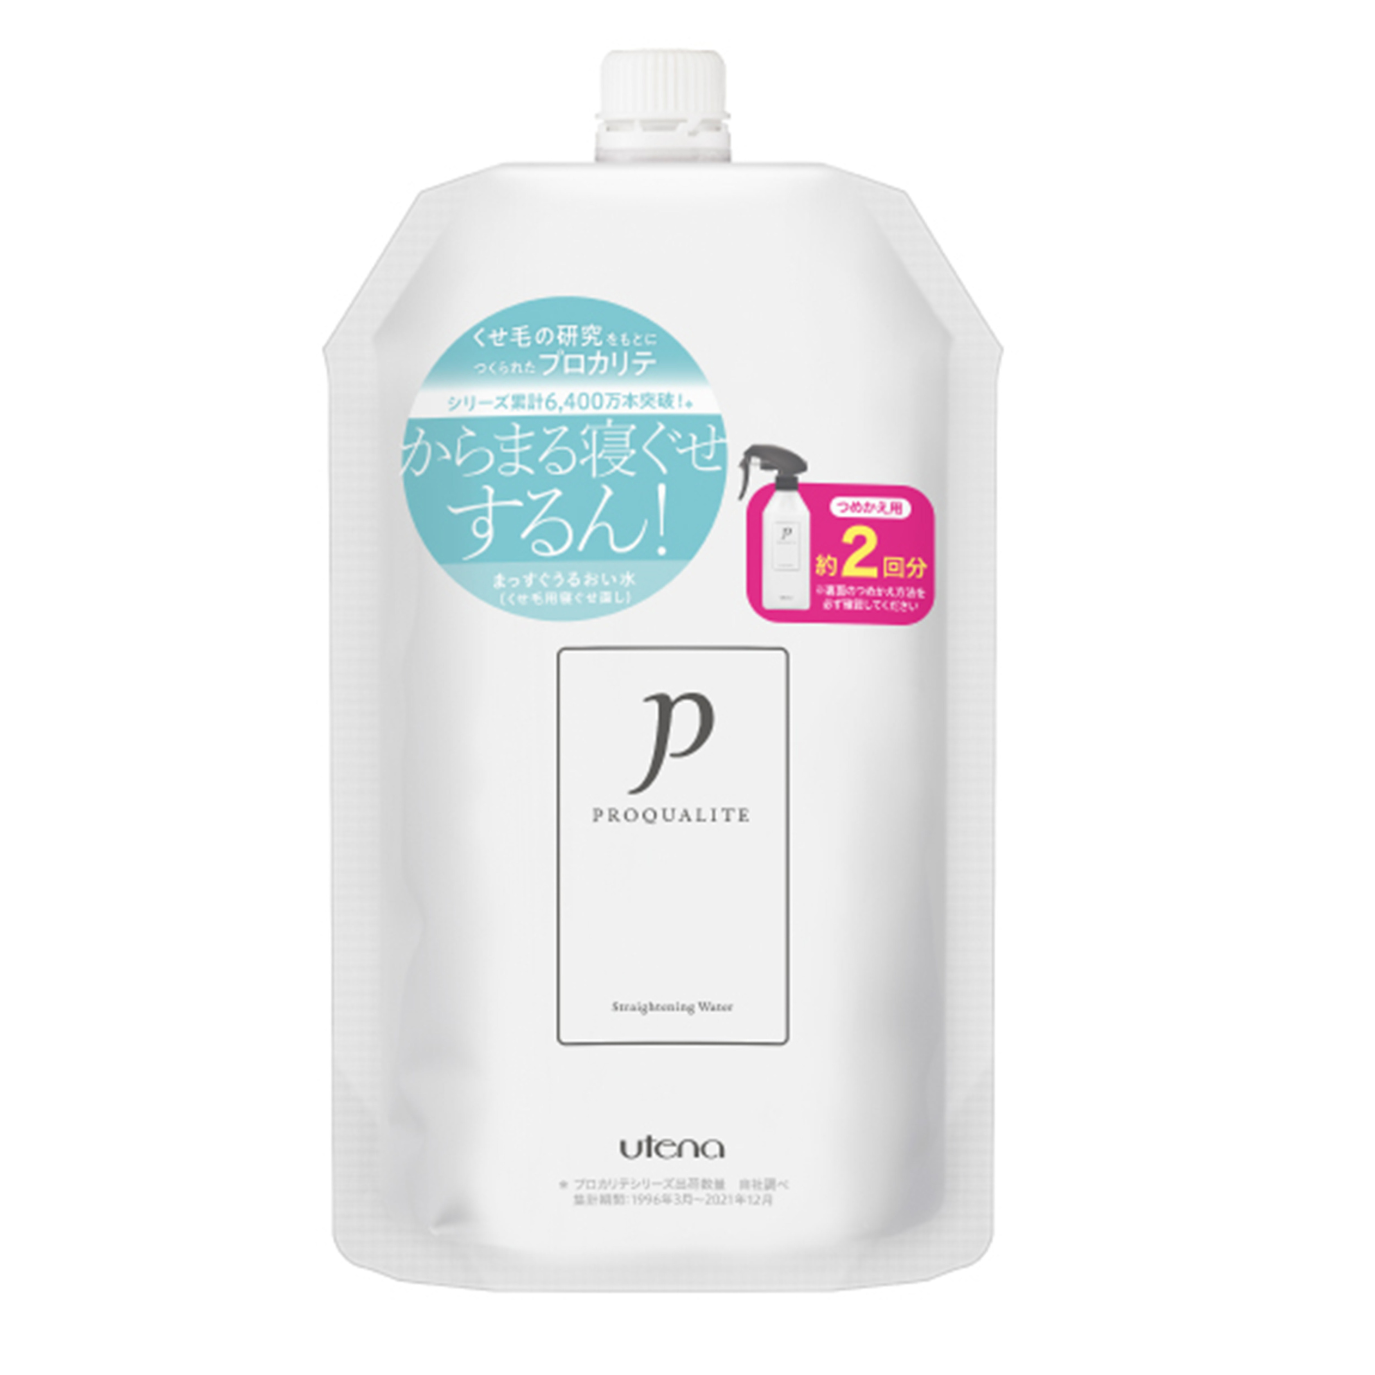 Utena PROQUALITE Straight Moisturizing Water 400ml - Refill - TODOKU Japan - Japanese Beauty Skin Care and Cosmetics